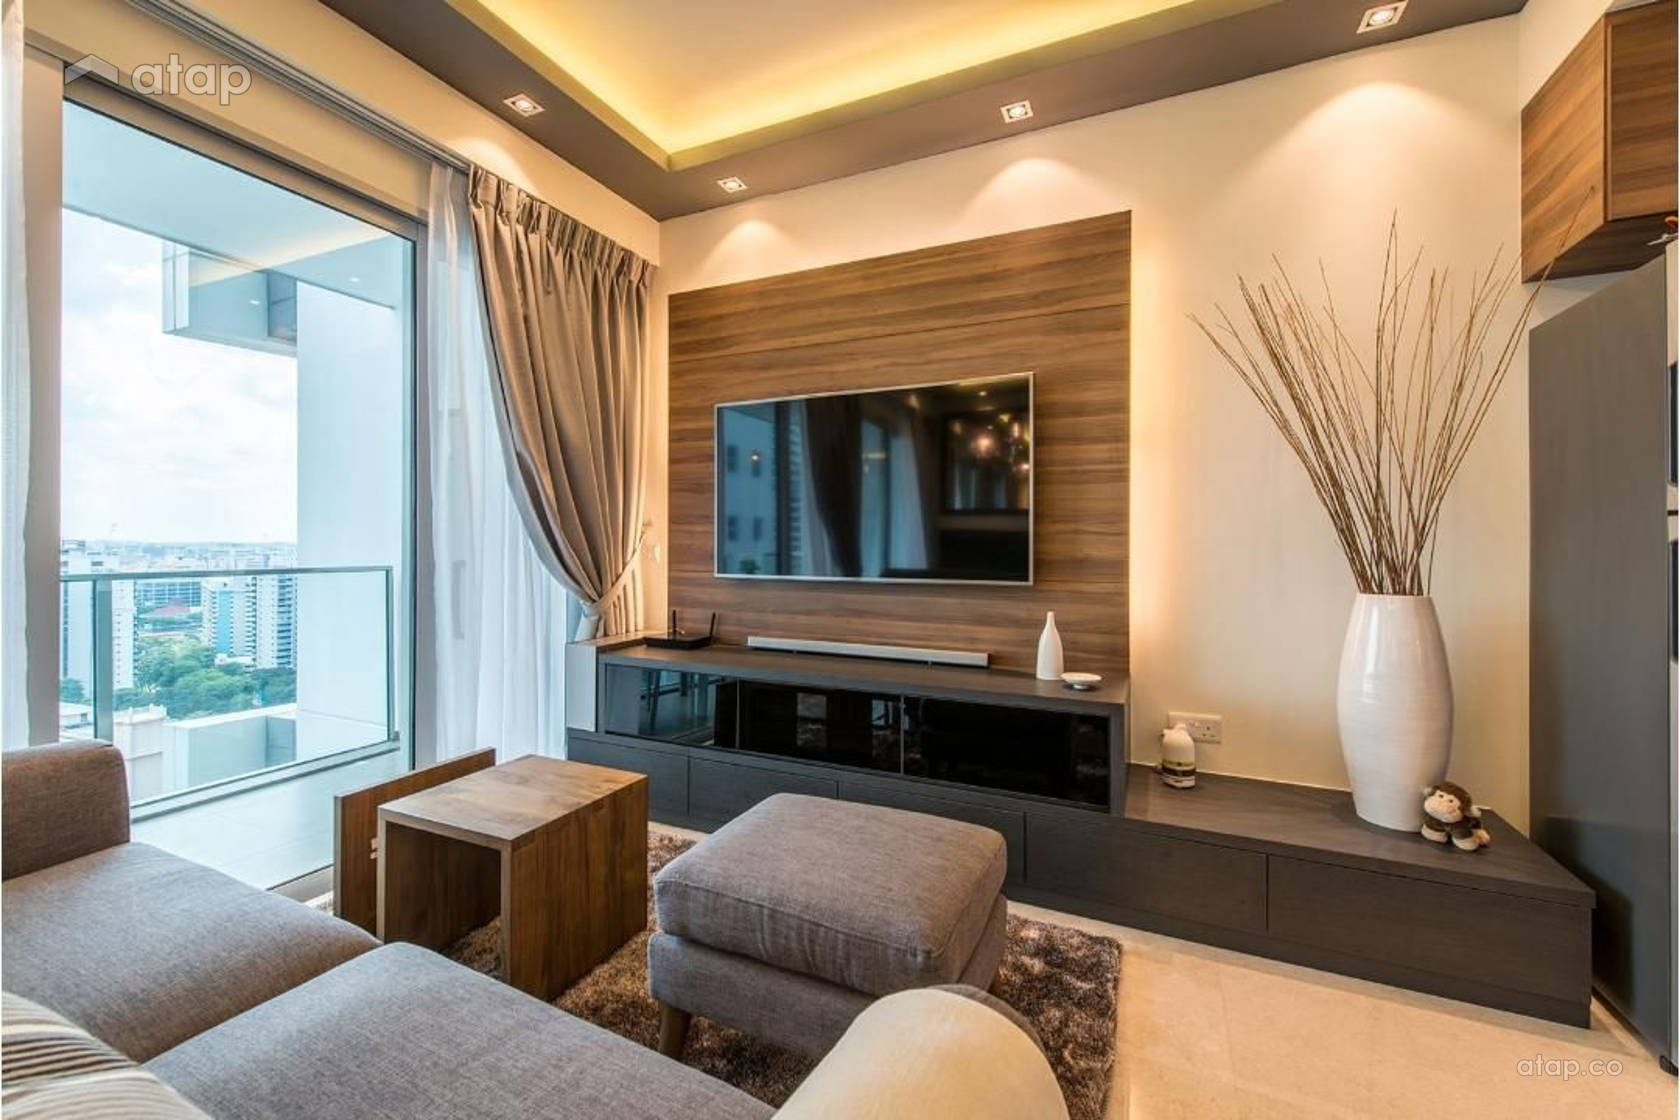 Condo Living Room Design: Comfort And Stylish Simplicity